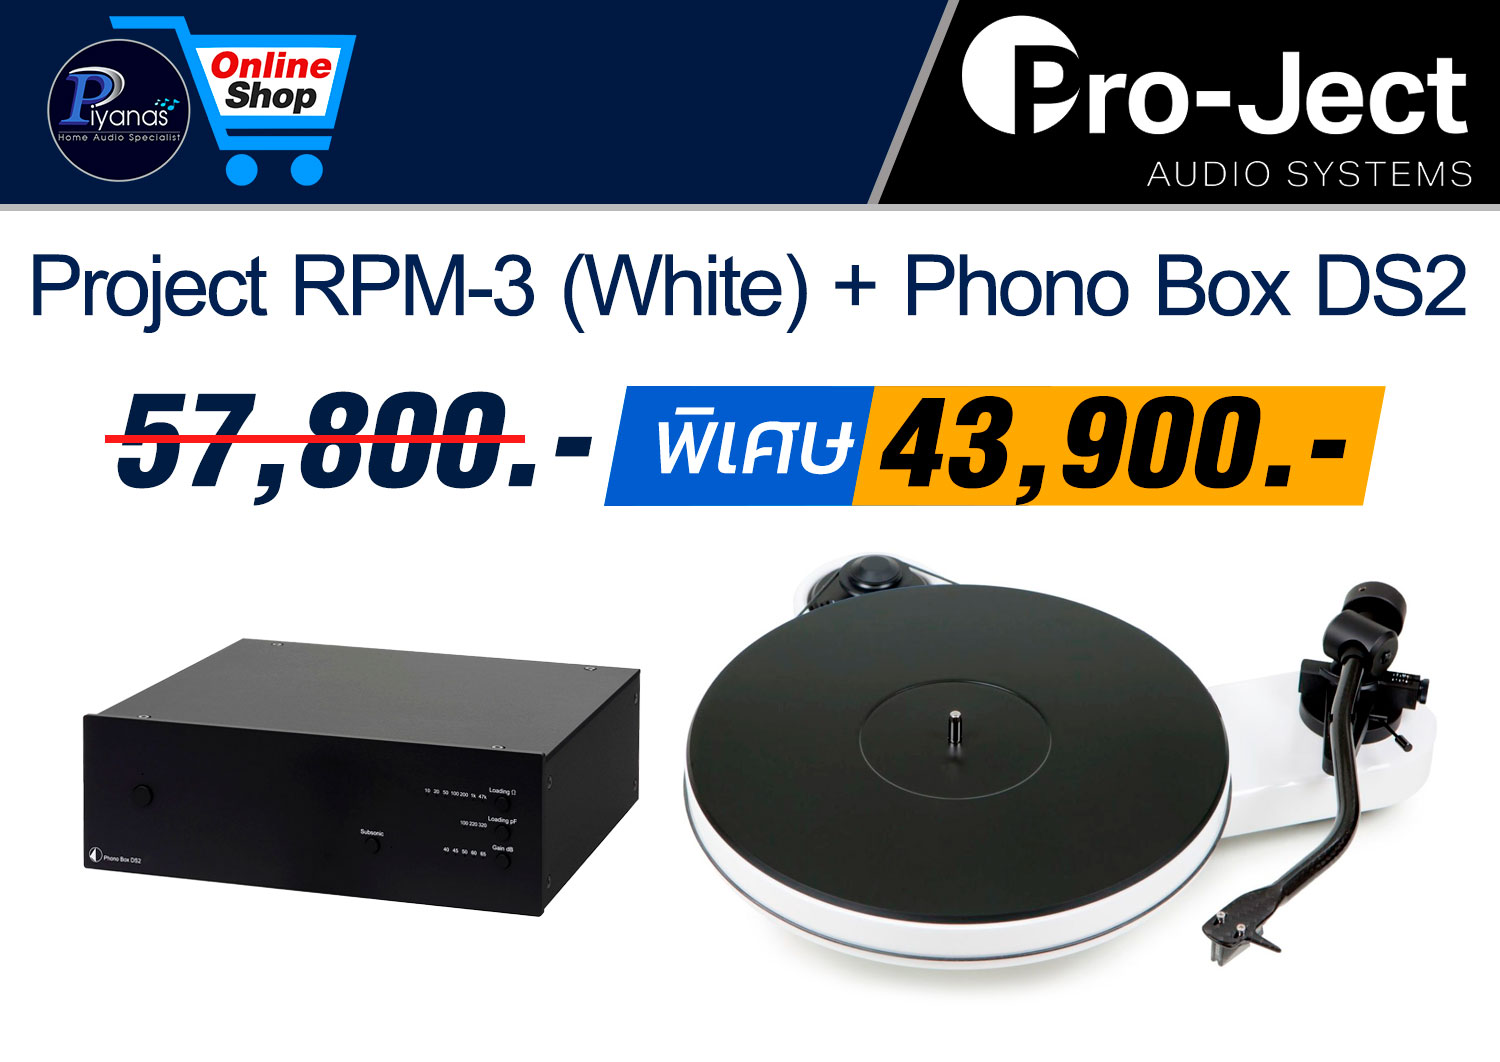 RPM-3 Carbon (White)
+ Phono box DS2